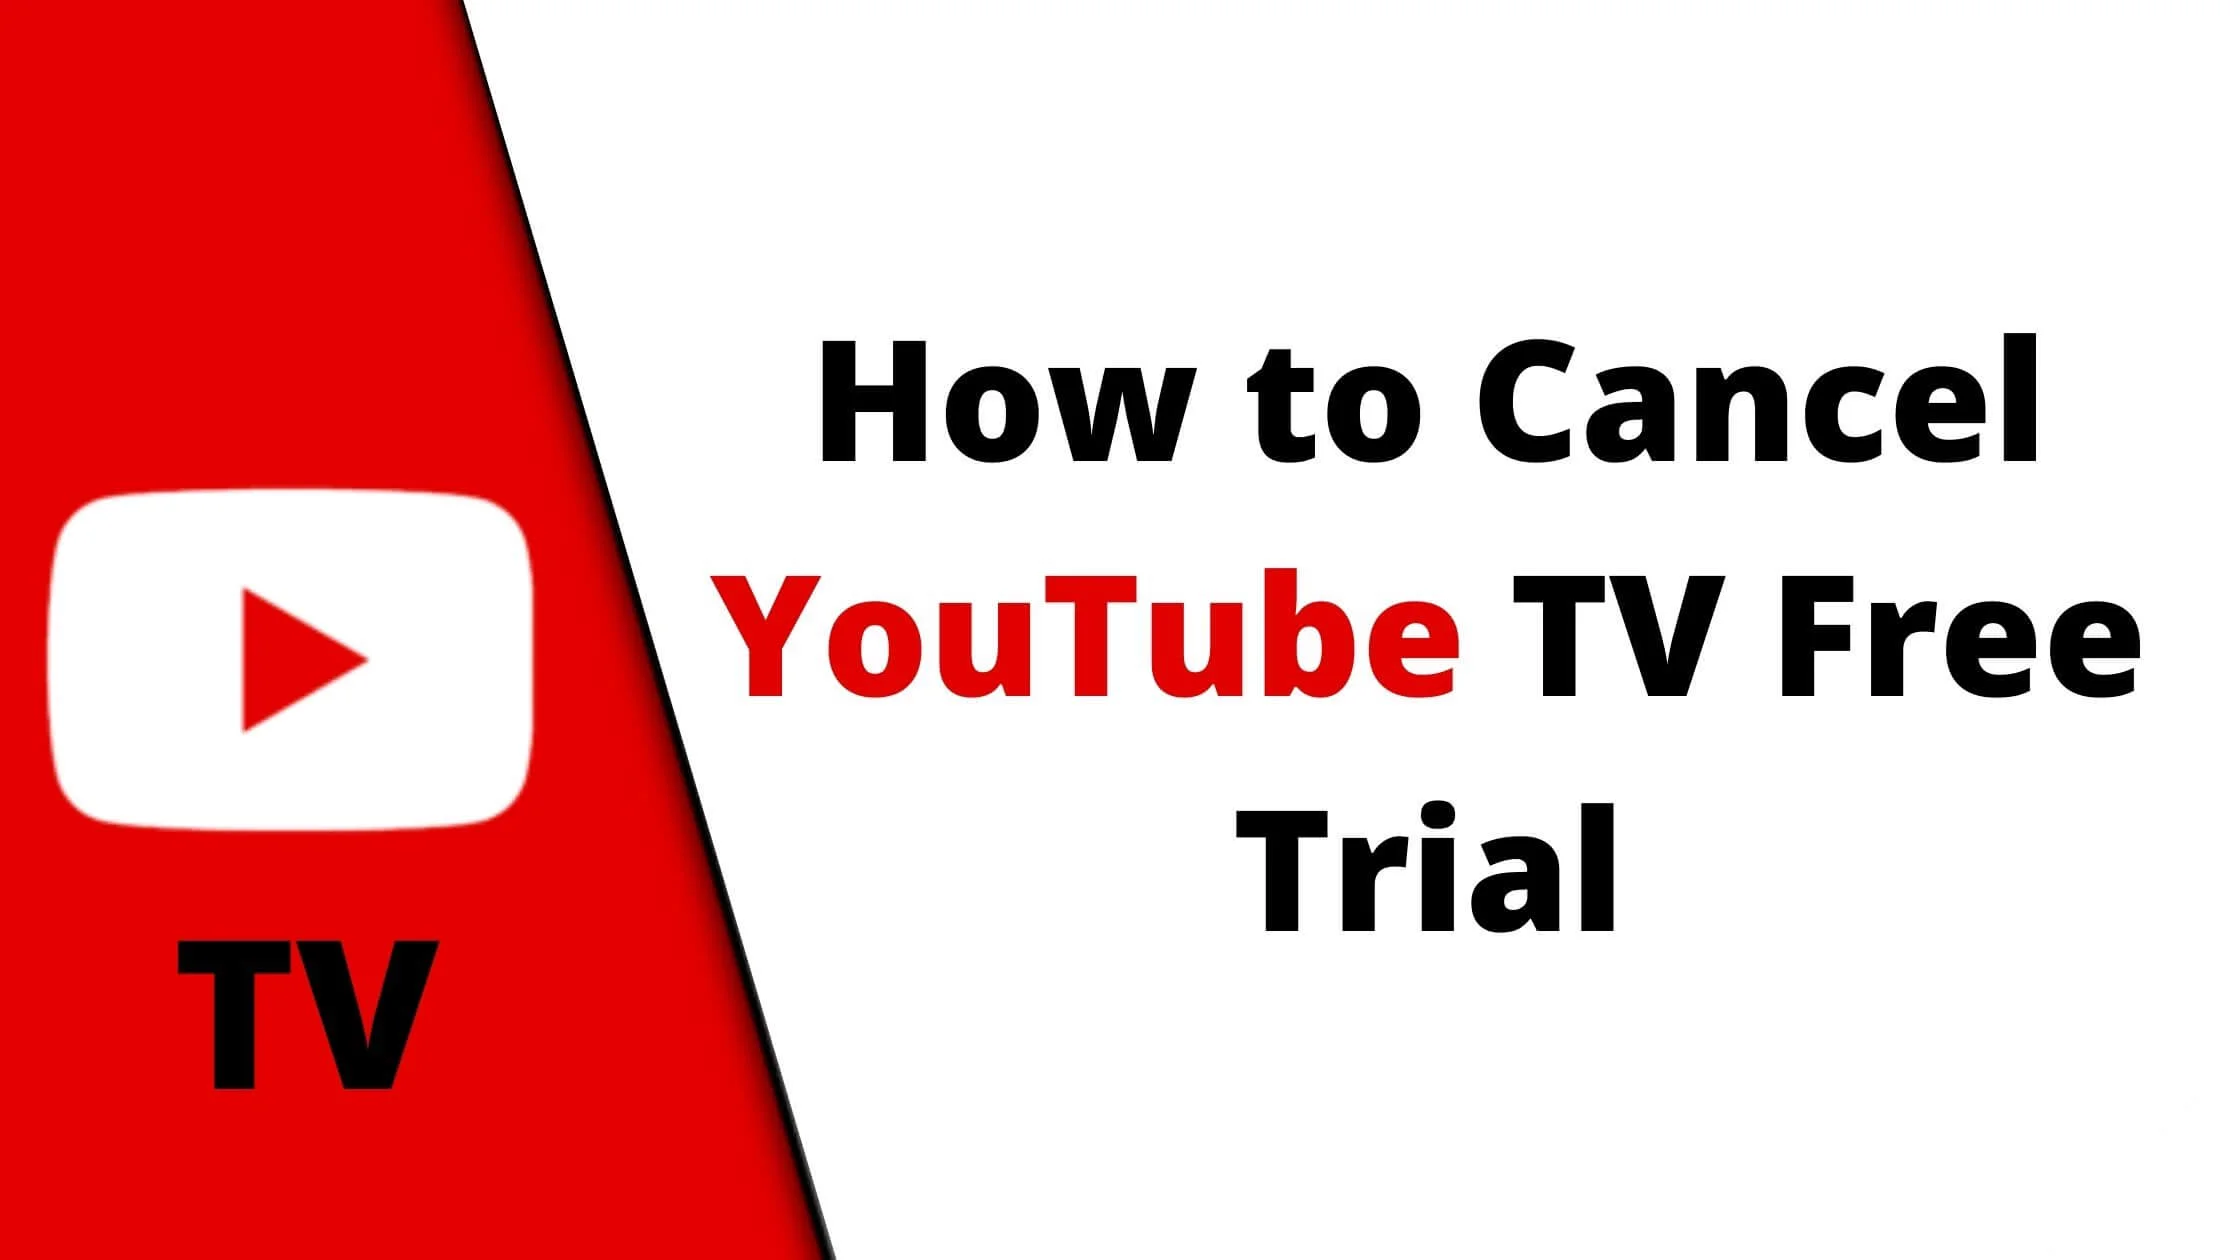 Cancel YouTube TV Free Trial